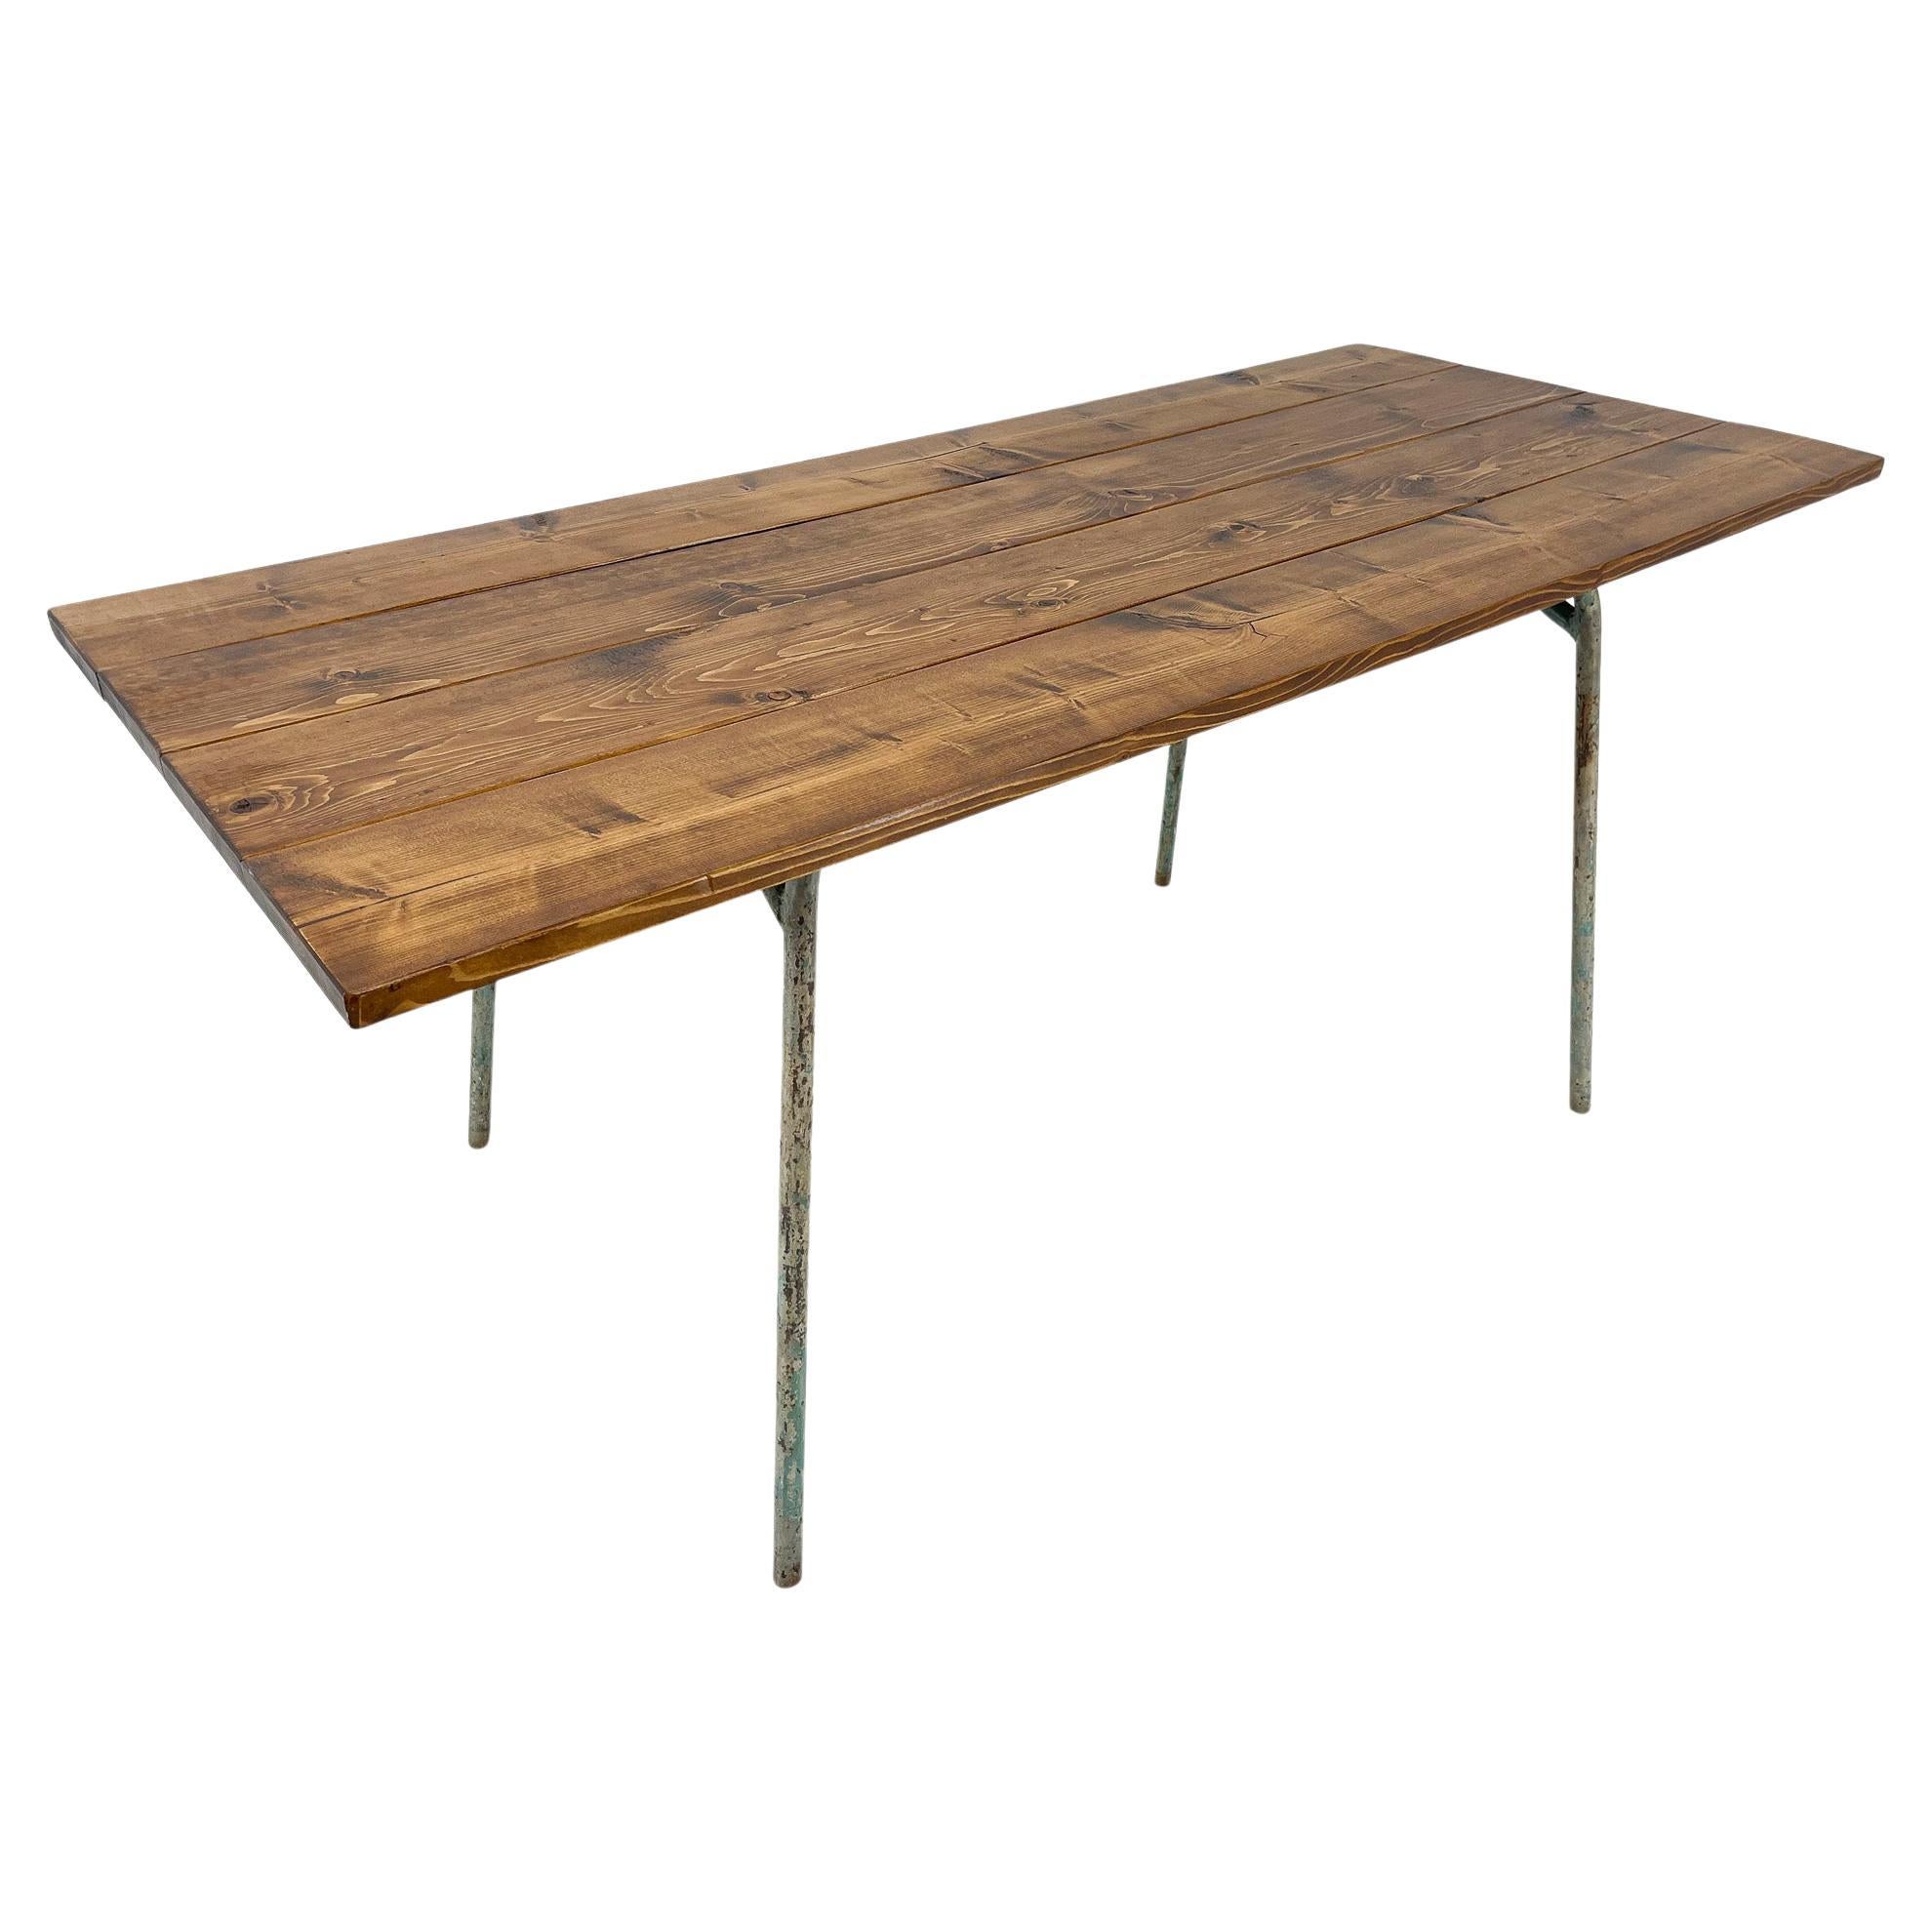 Vintage Indrustrial Wood & Metal Dining Table For Sale